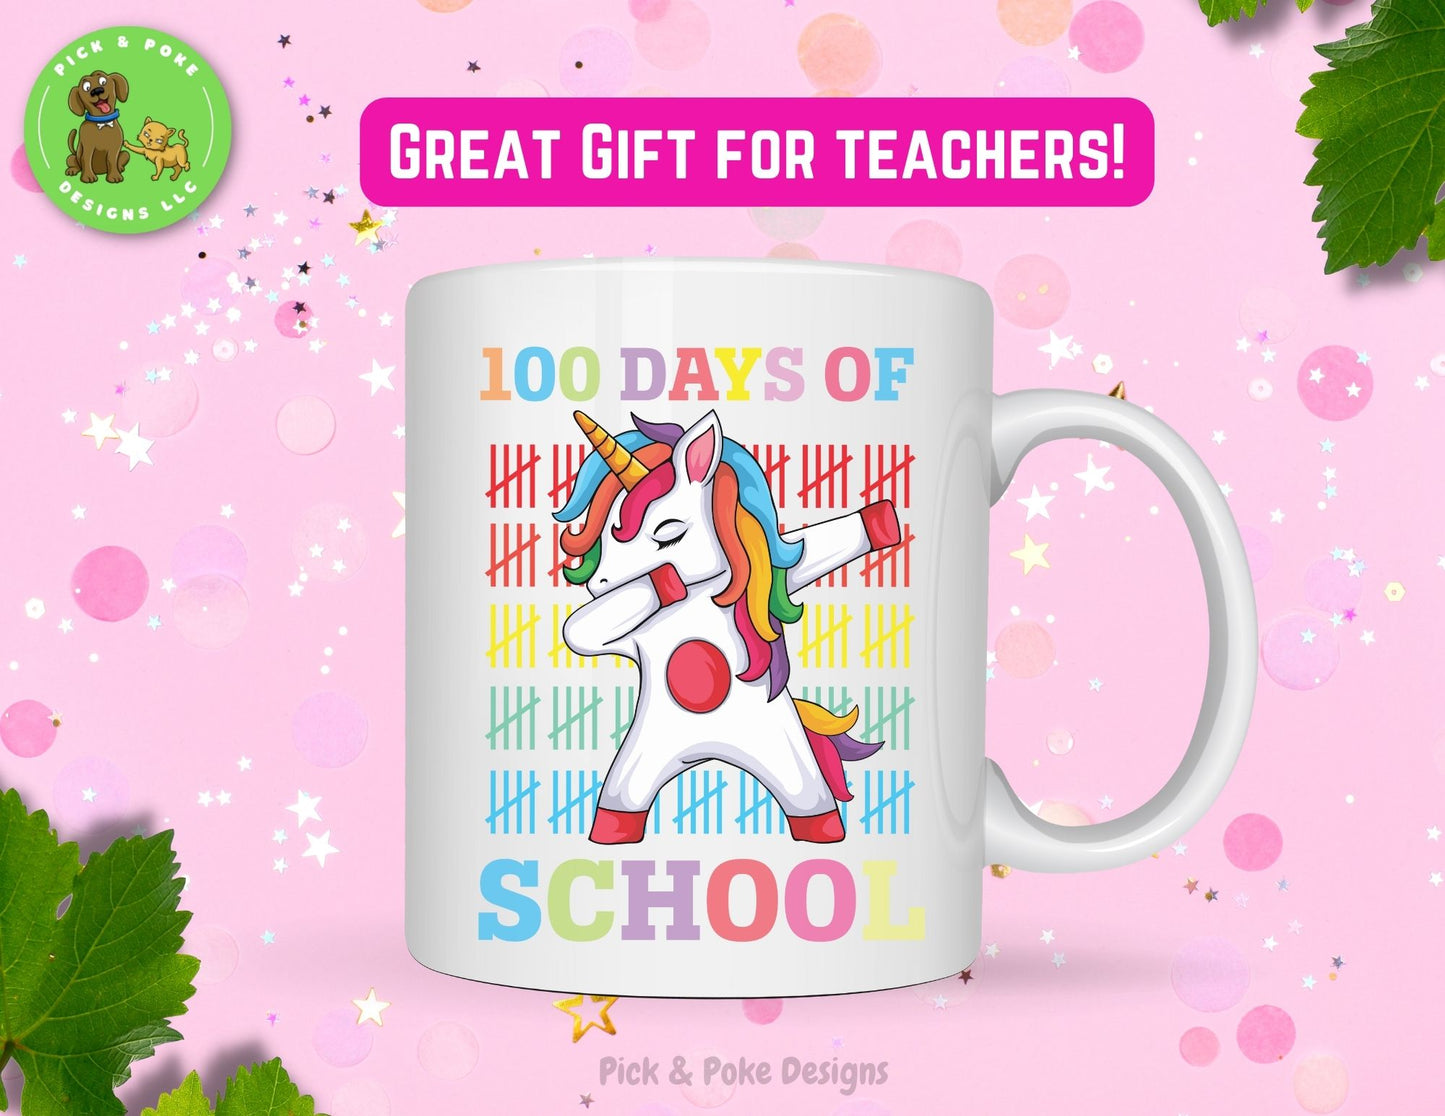 11oz 100 days of school mug is great gift for teachers.